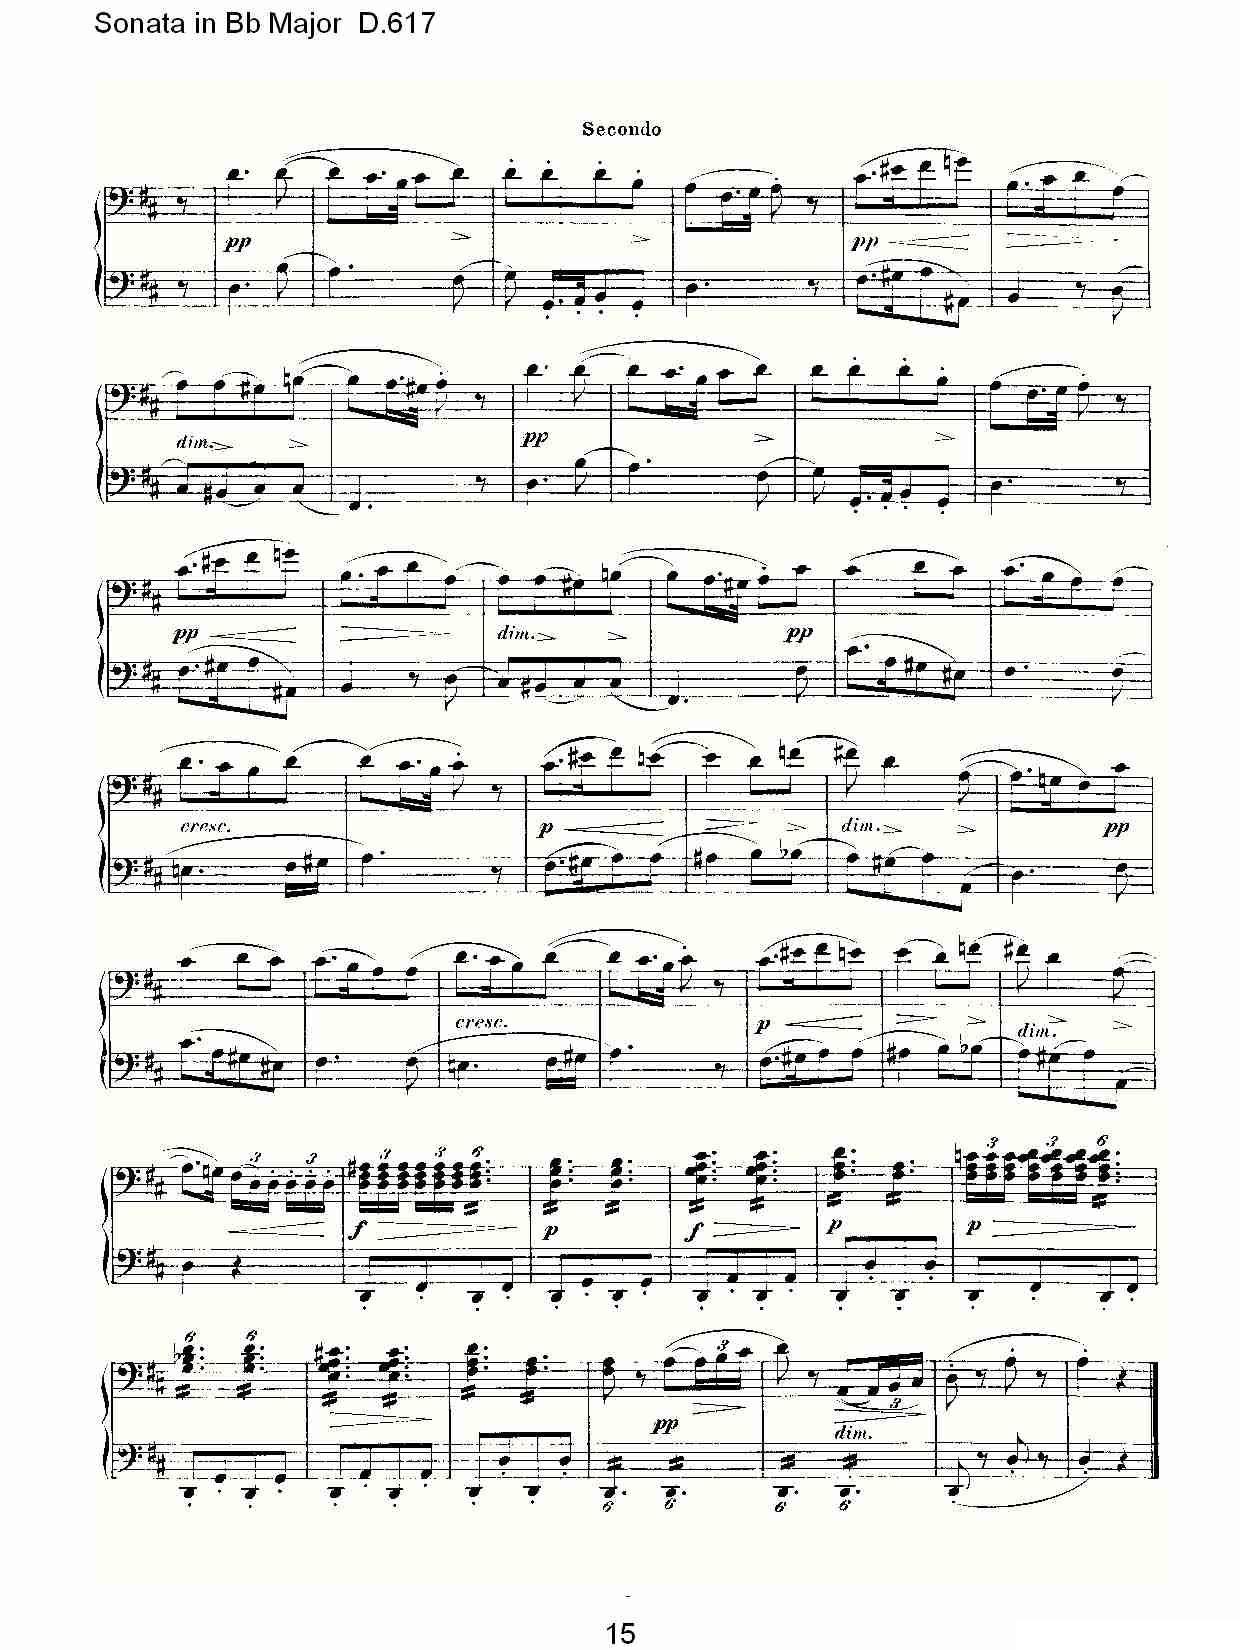 Sonata in Bb Major D.617（Bb大调奏鸣曲 D.617）钢琴曲谱（图15）